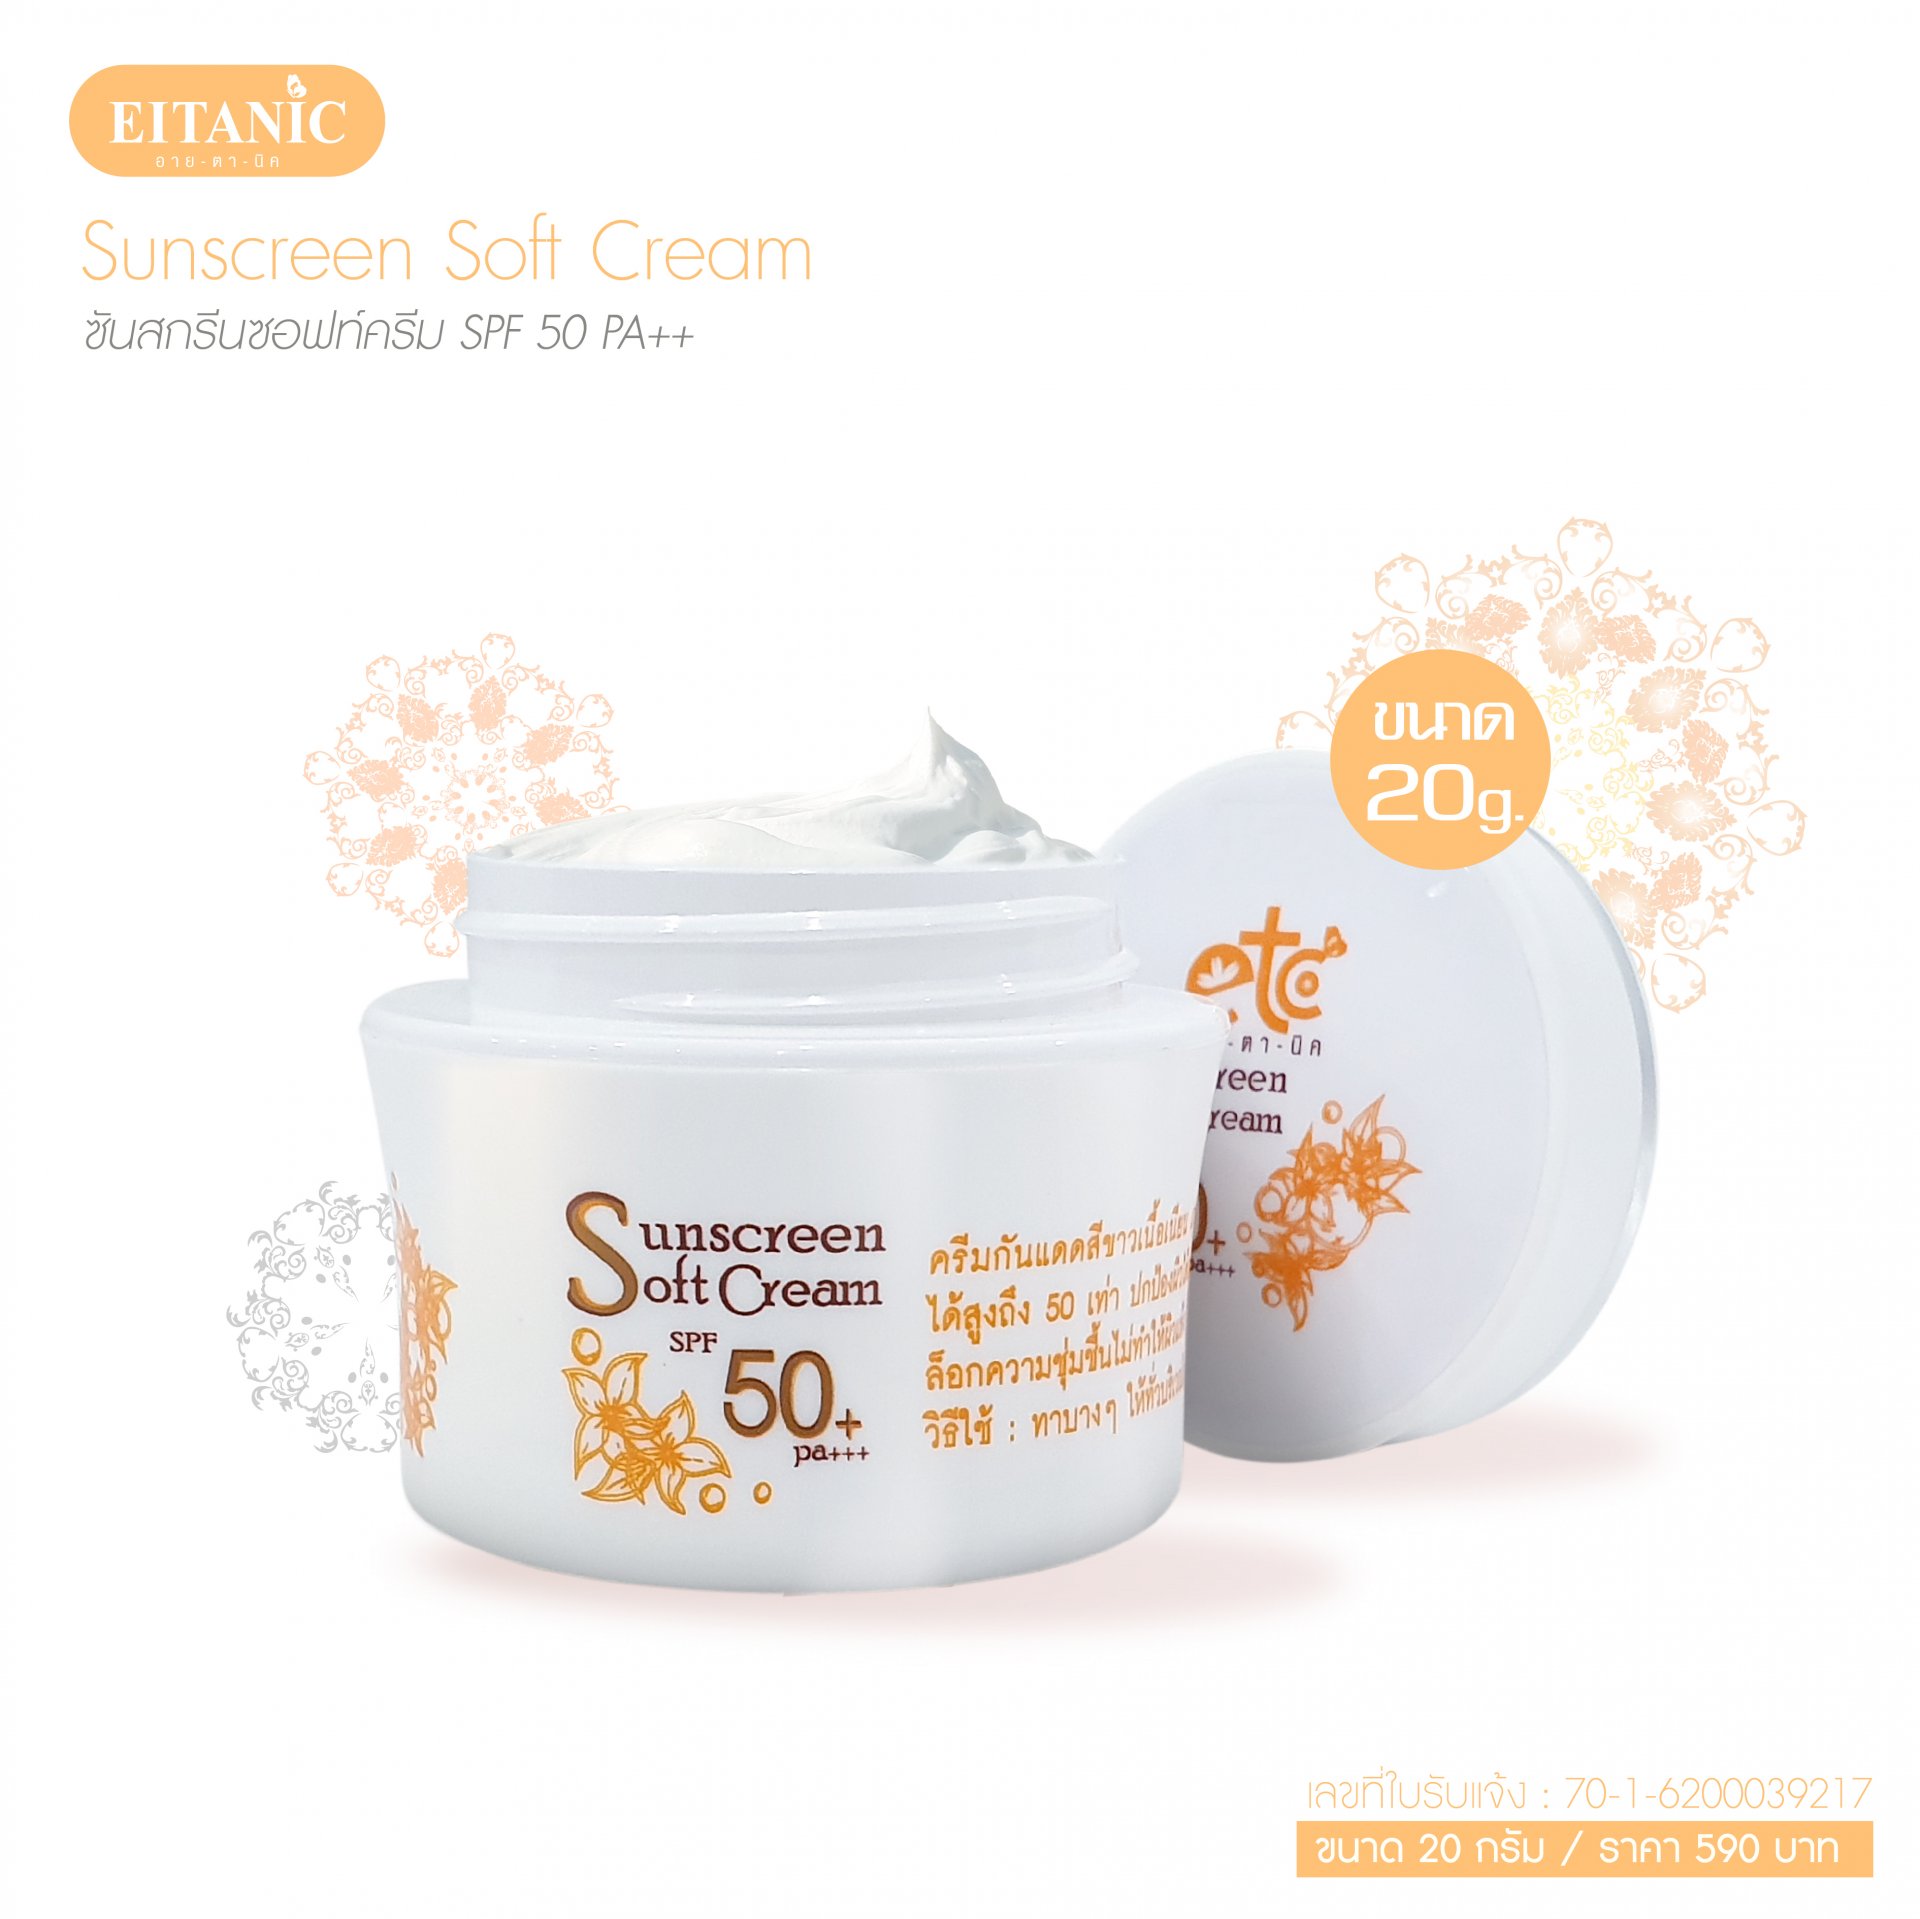 Sunscreen Soft Cream SPF 50+ PA+